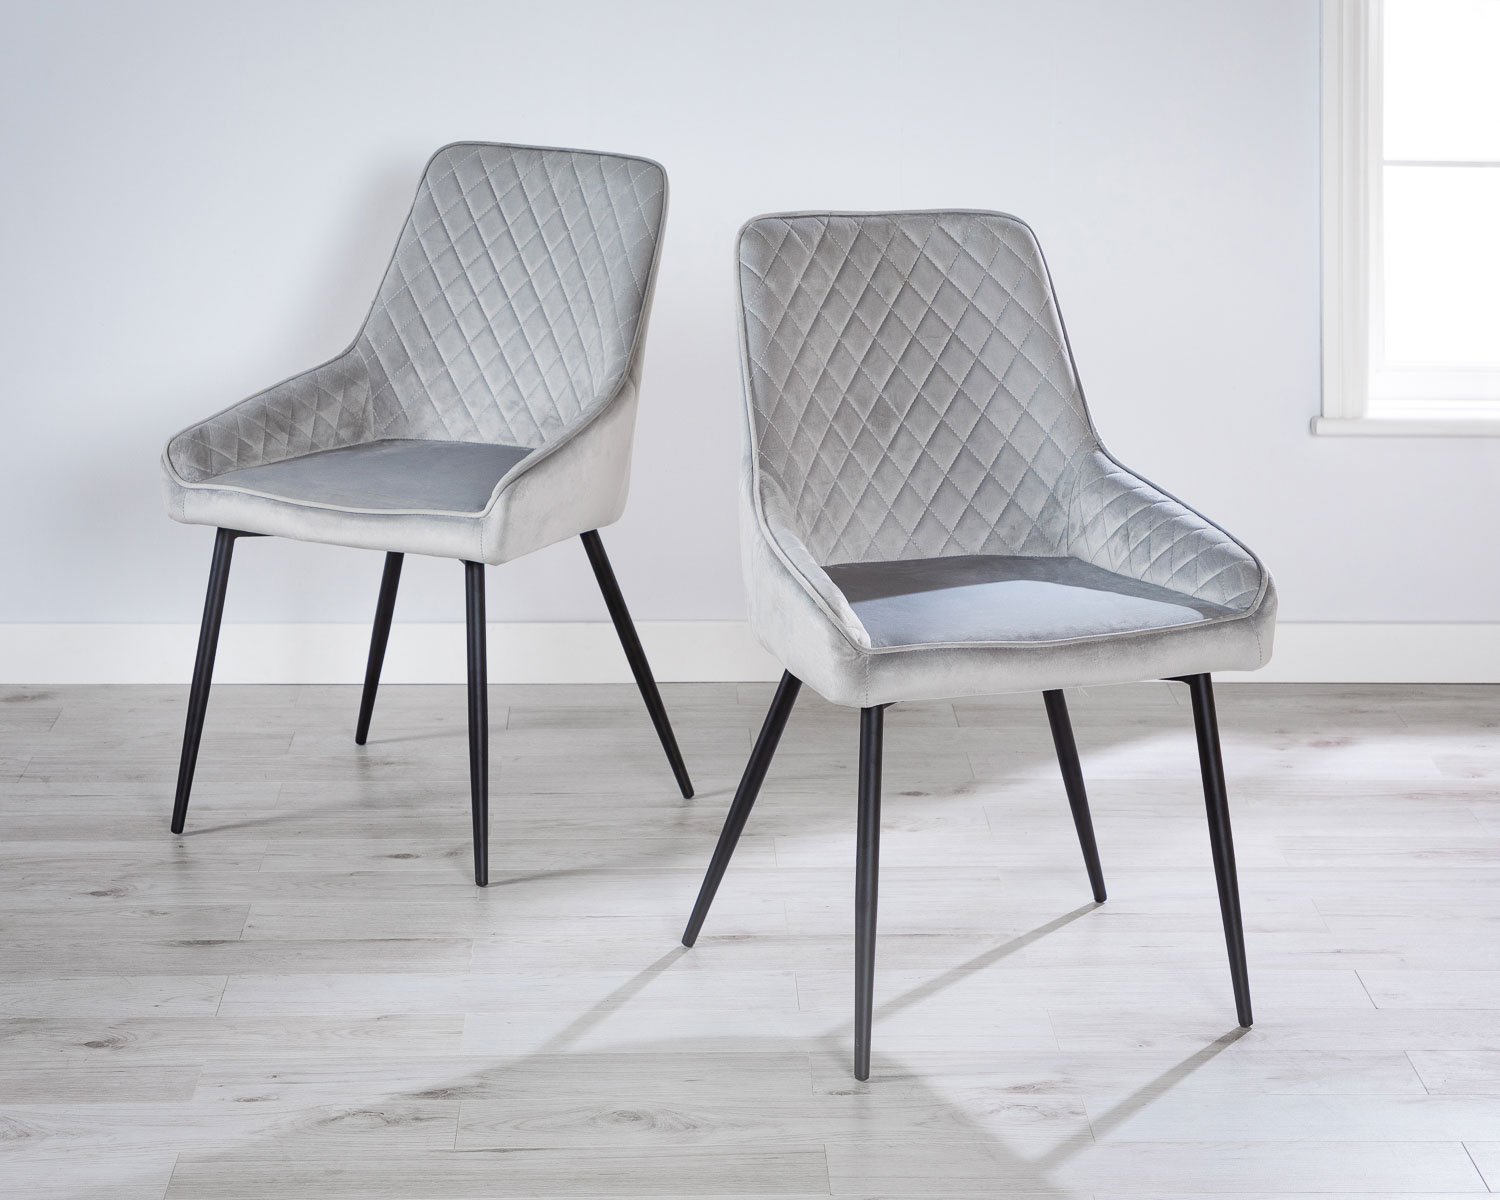 Pair of Light Grey Velvet Dining Chairs with Black Legs - Hampton